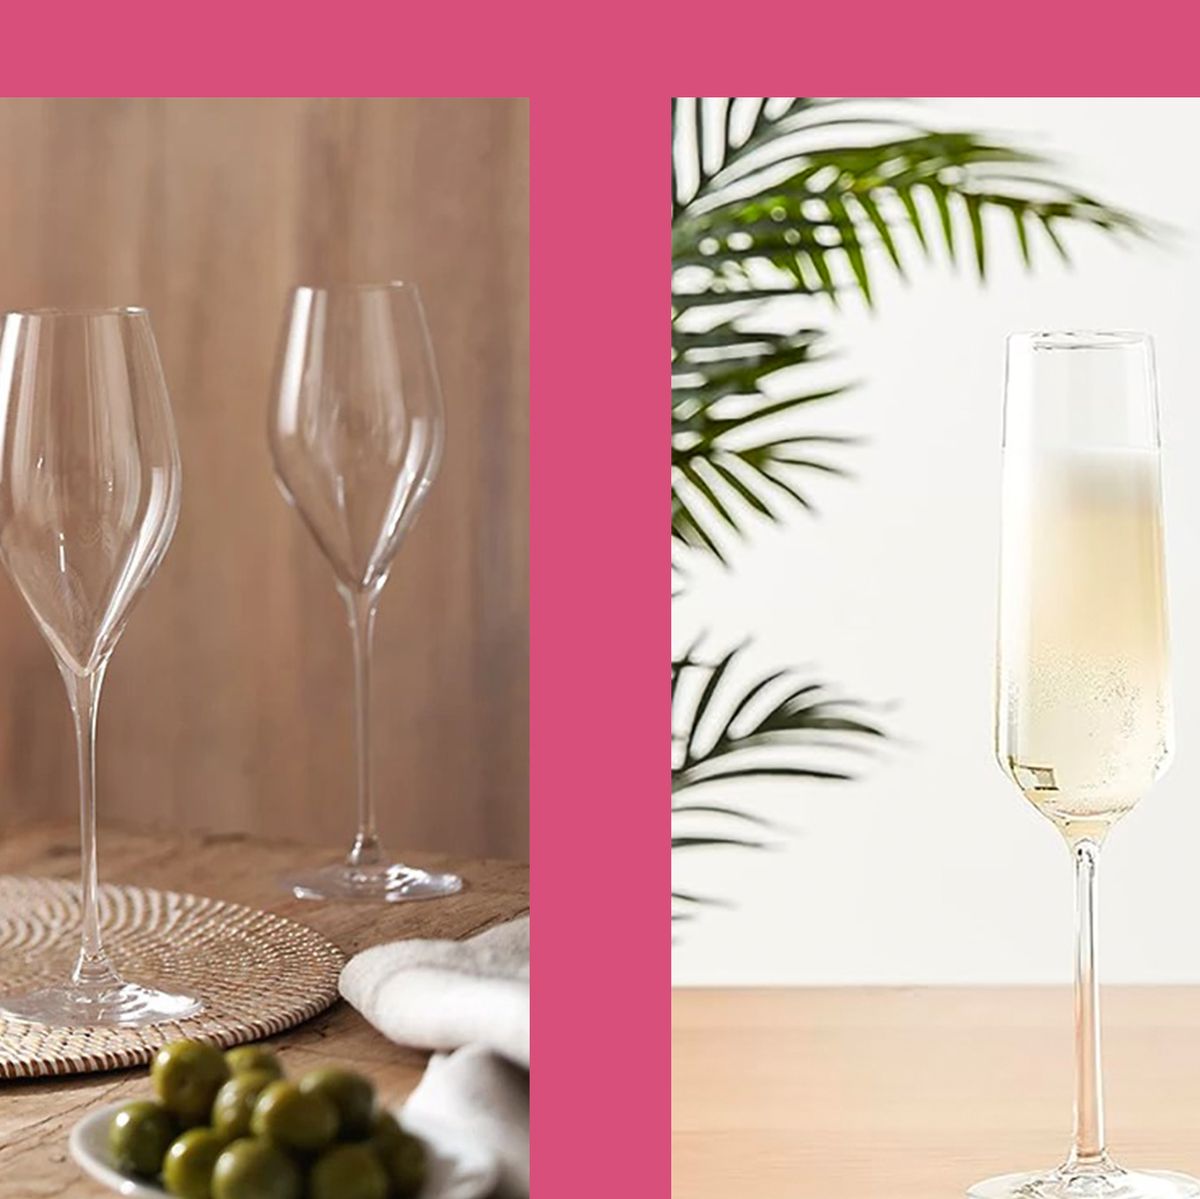 13 Best Champagne Glasses 2022